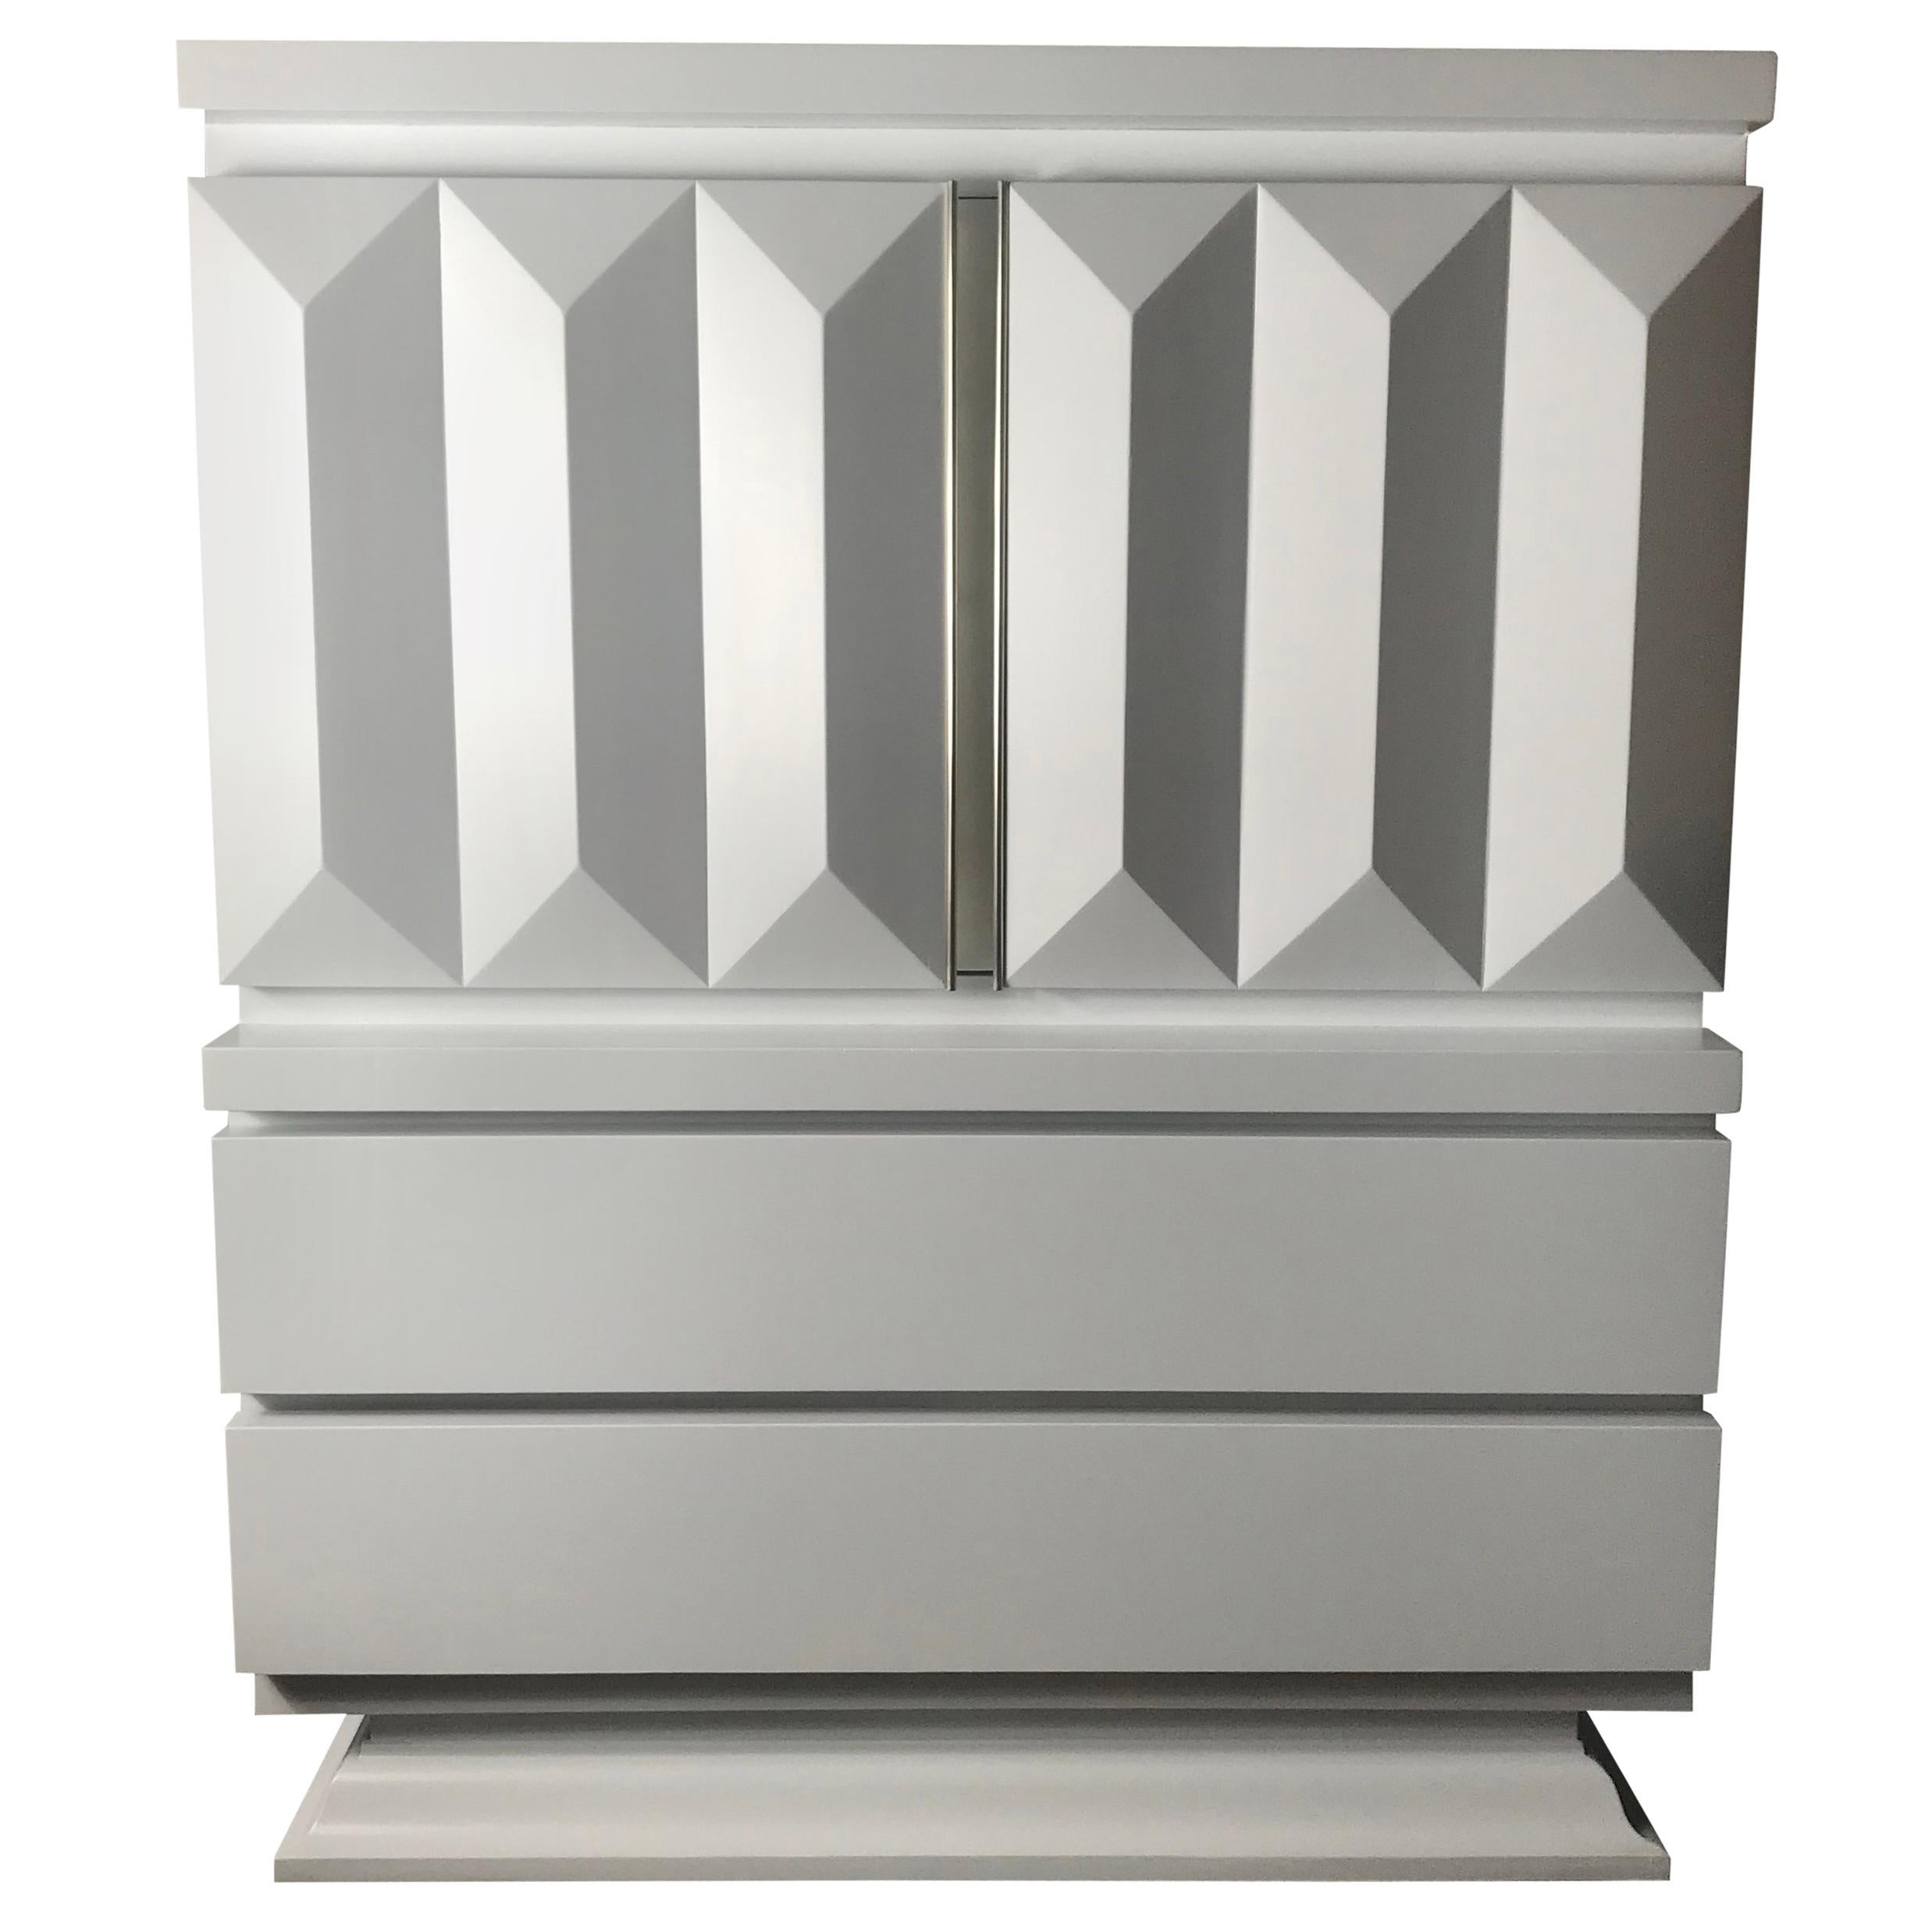 Stunning Modernist White Lacquered Chest, Sculpted Diamond Pillar Design